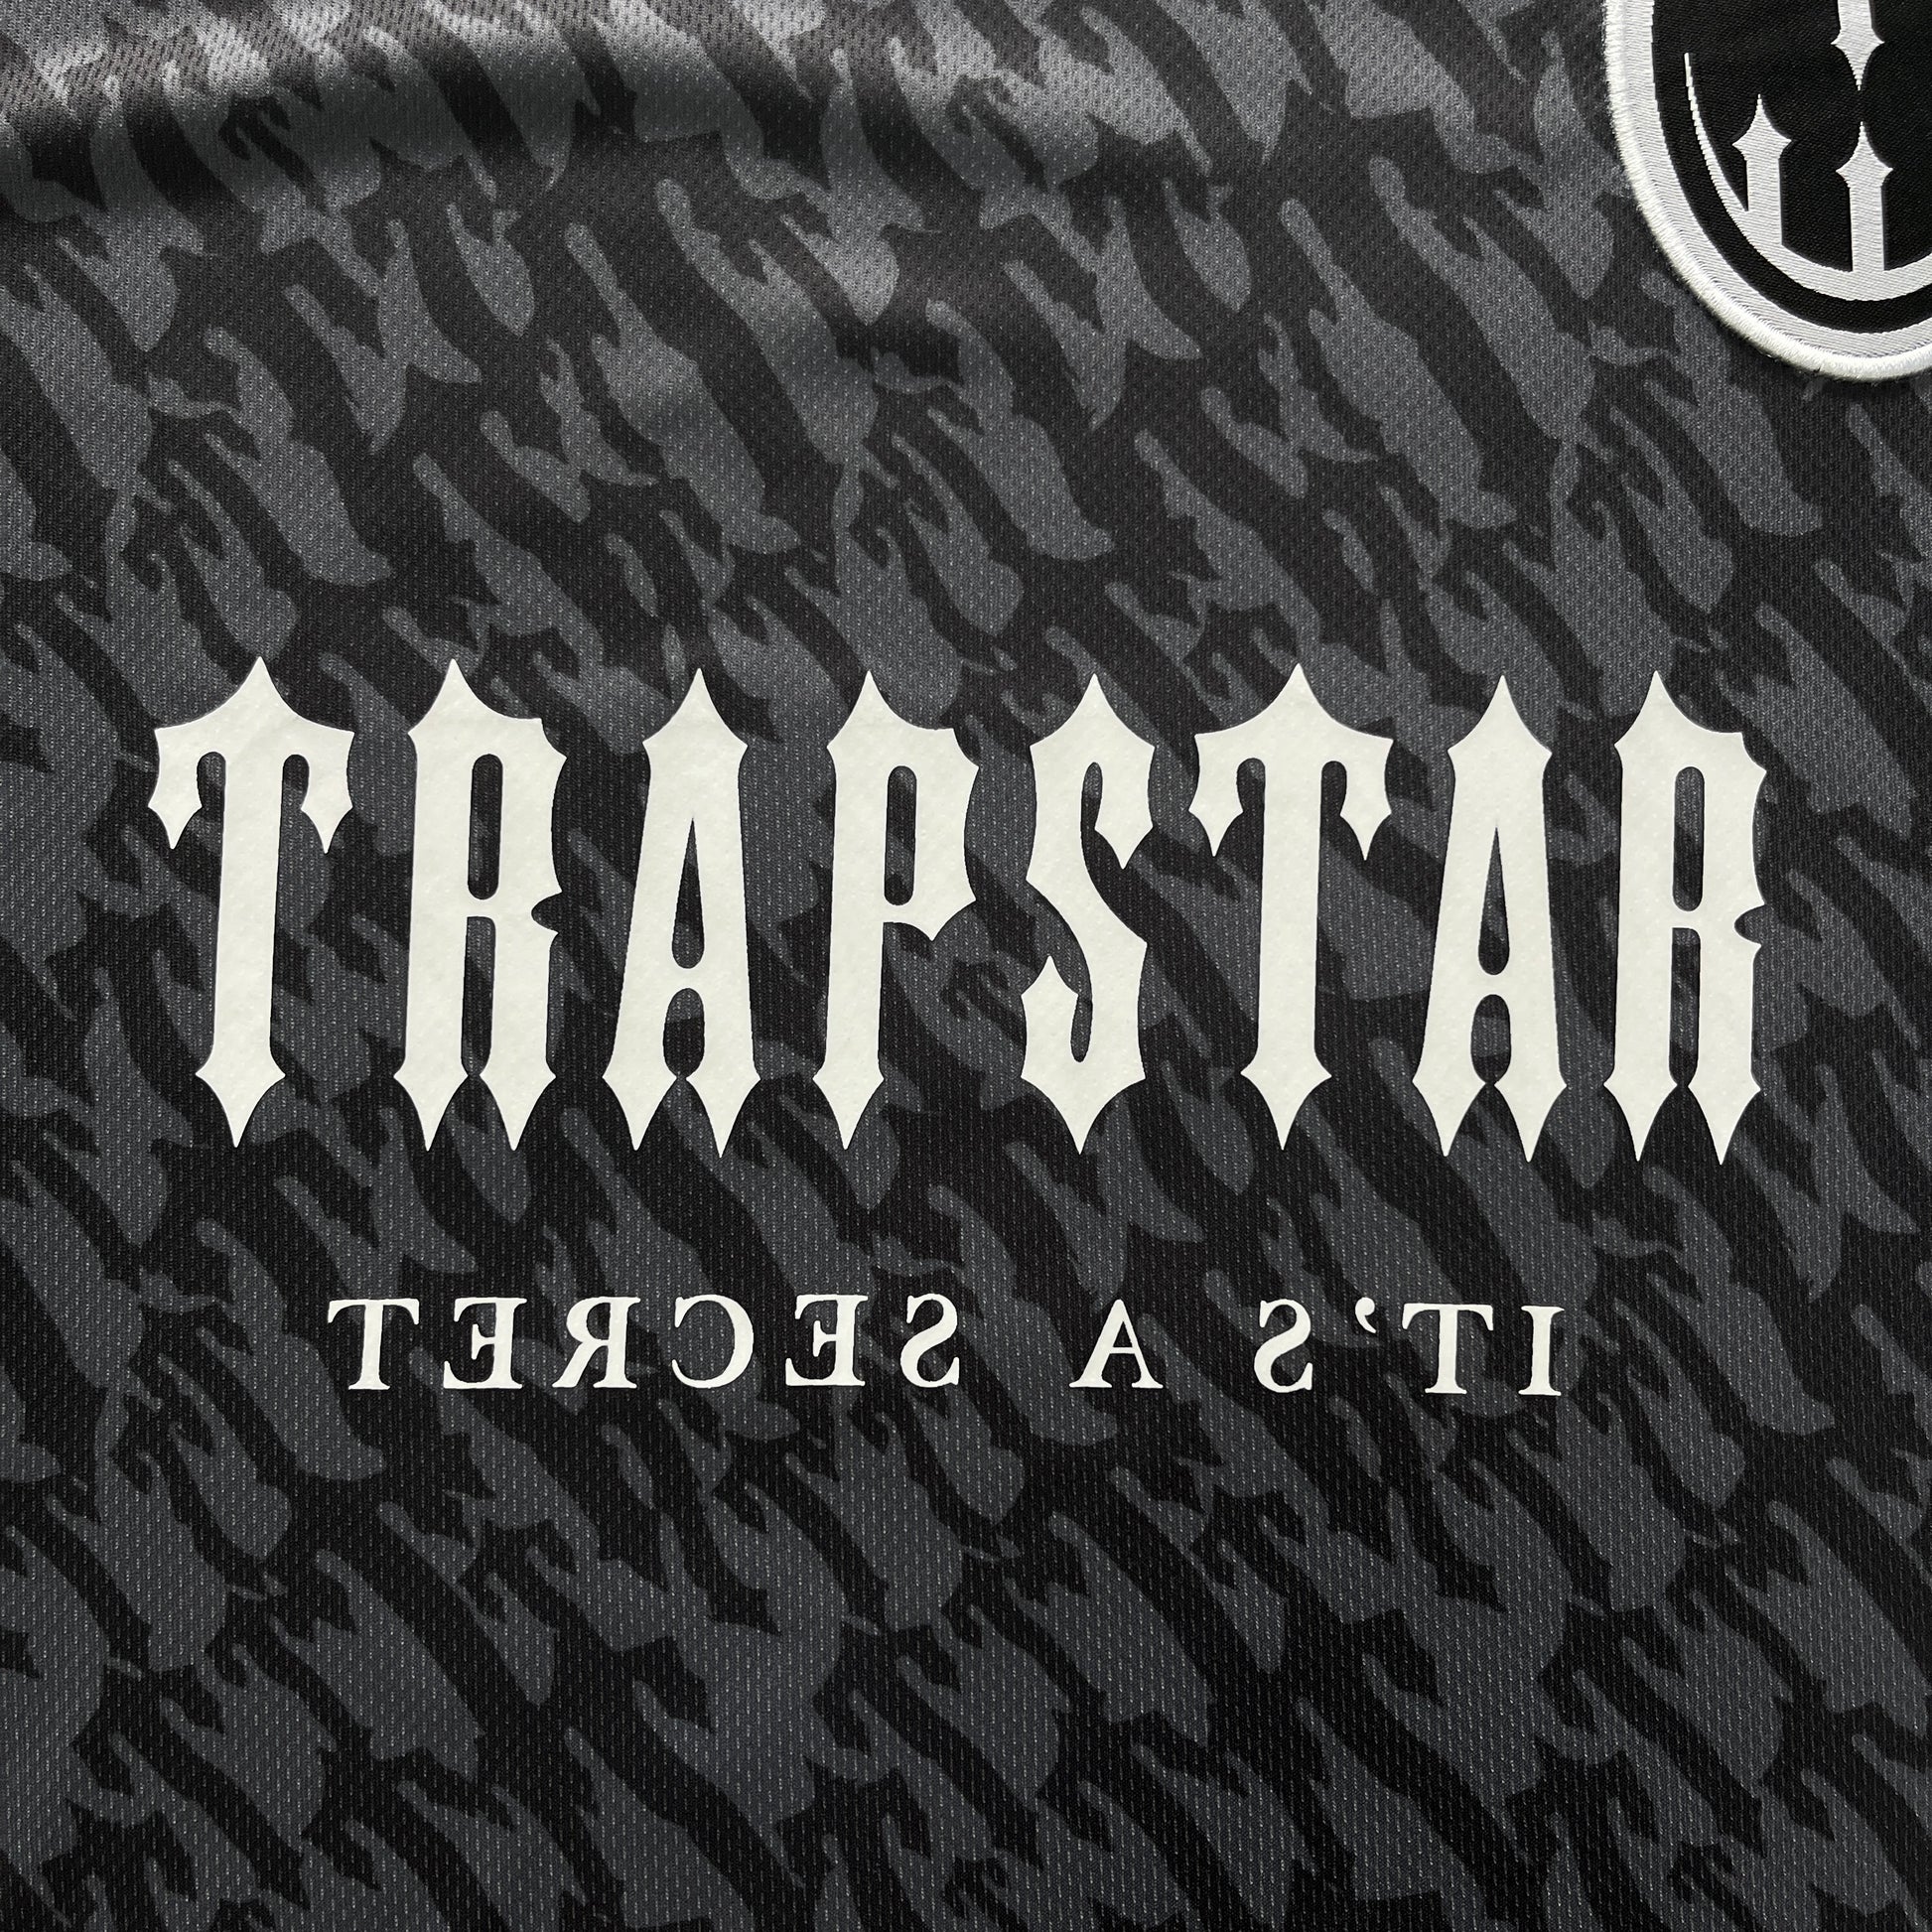 Trapstar Monogram Windbreaker Jacket